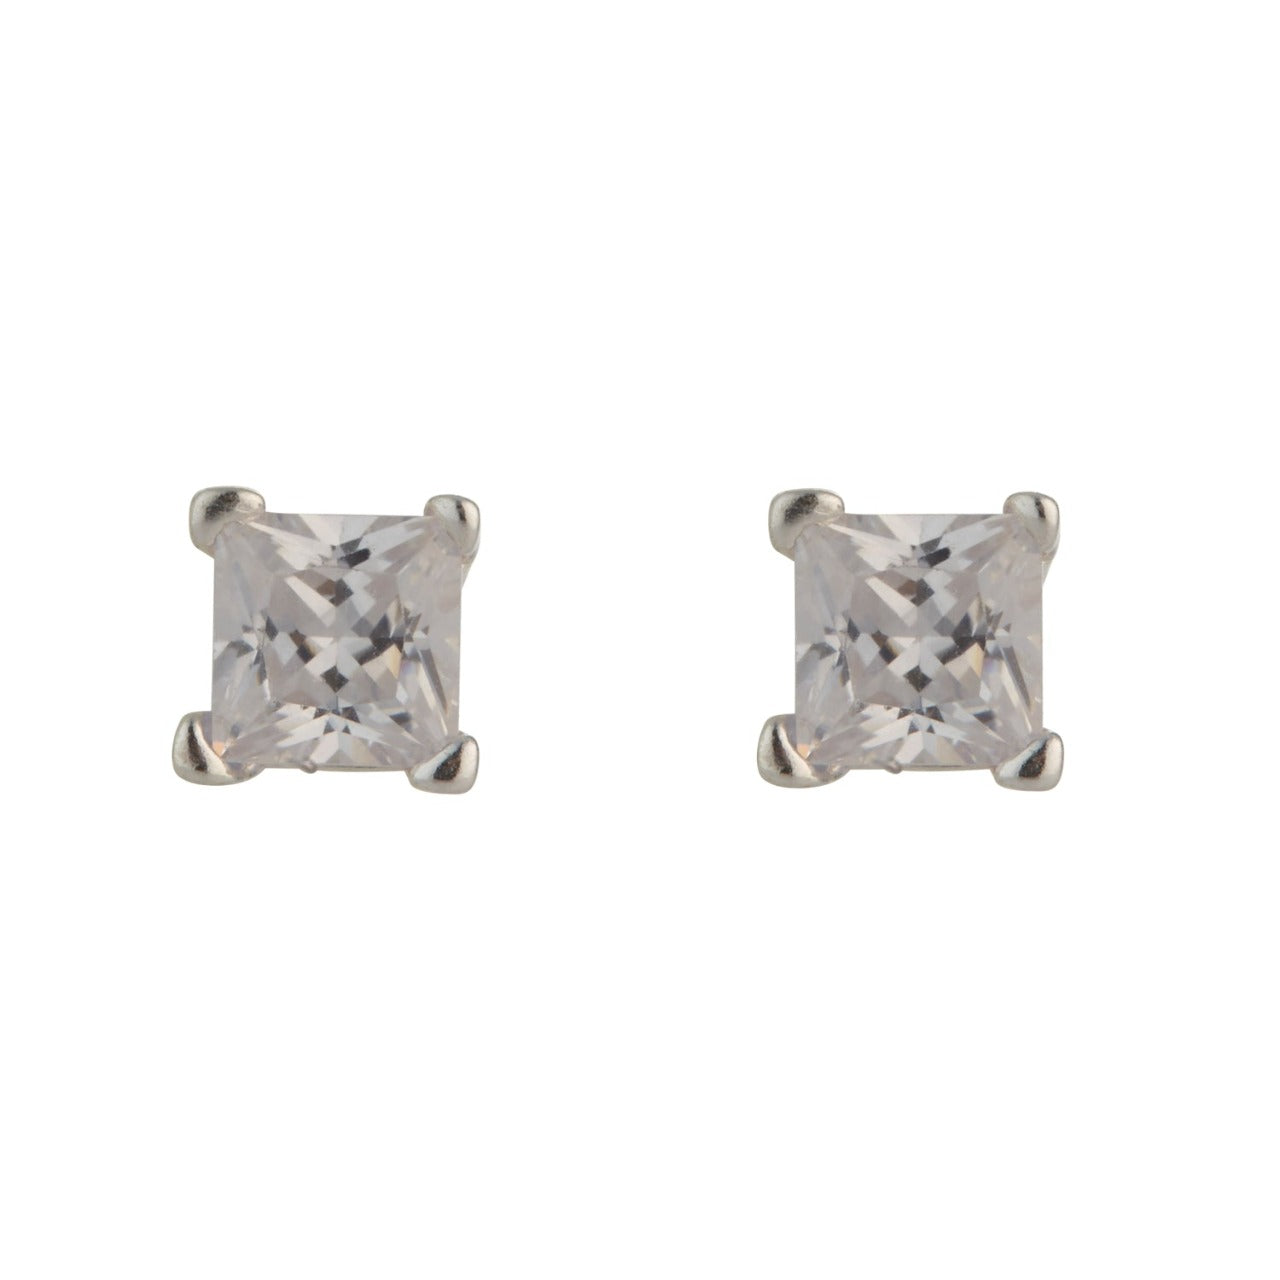 Crystal Stud Earrings by Kilkenny Silver   Sterling silver clear coloured crystal stone stud earring.